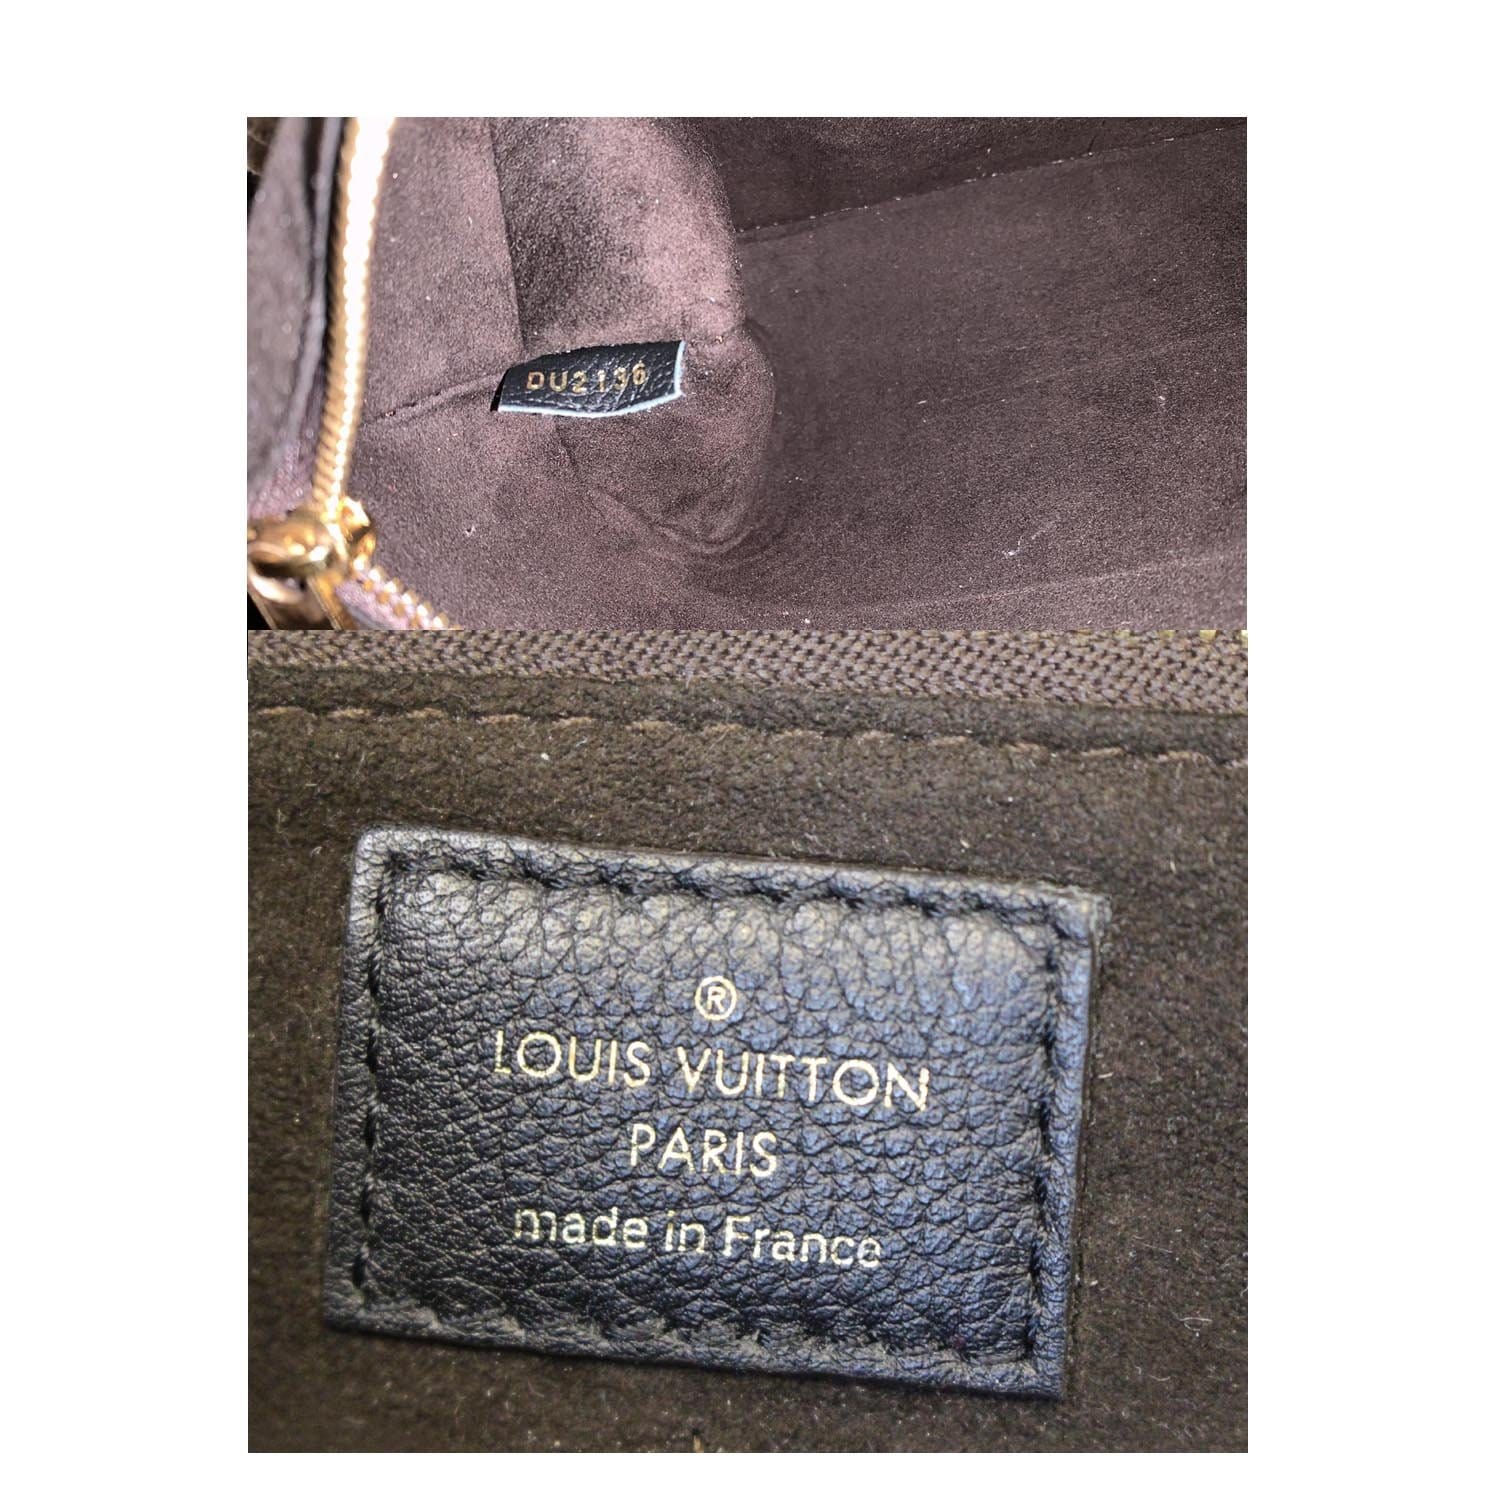  Customer reviews: Authentic Louis Vuitton Kimono Tote